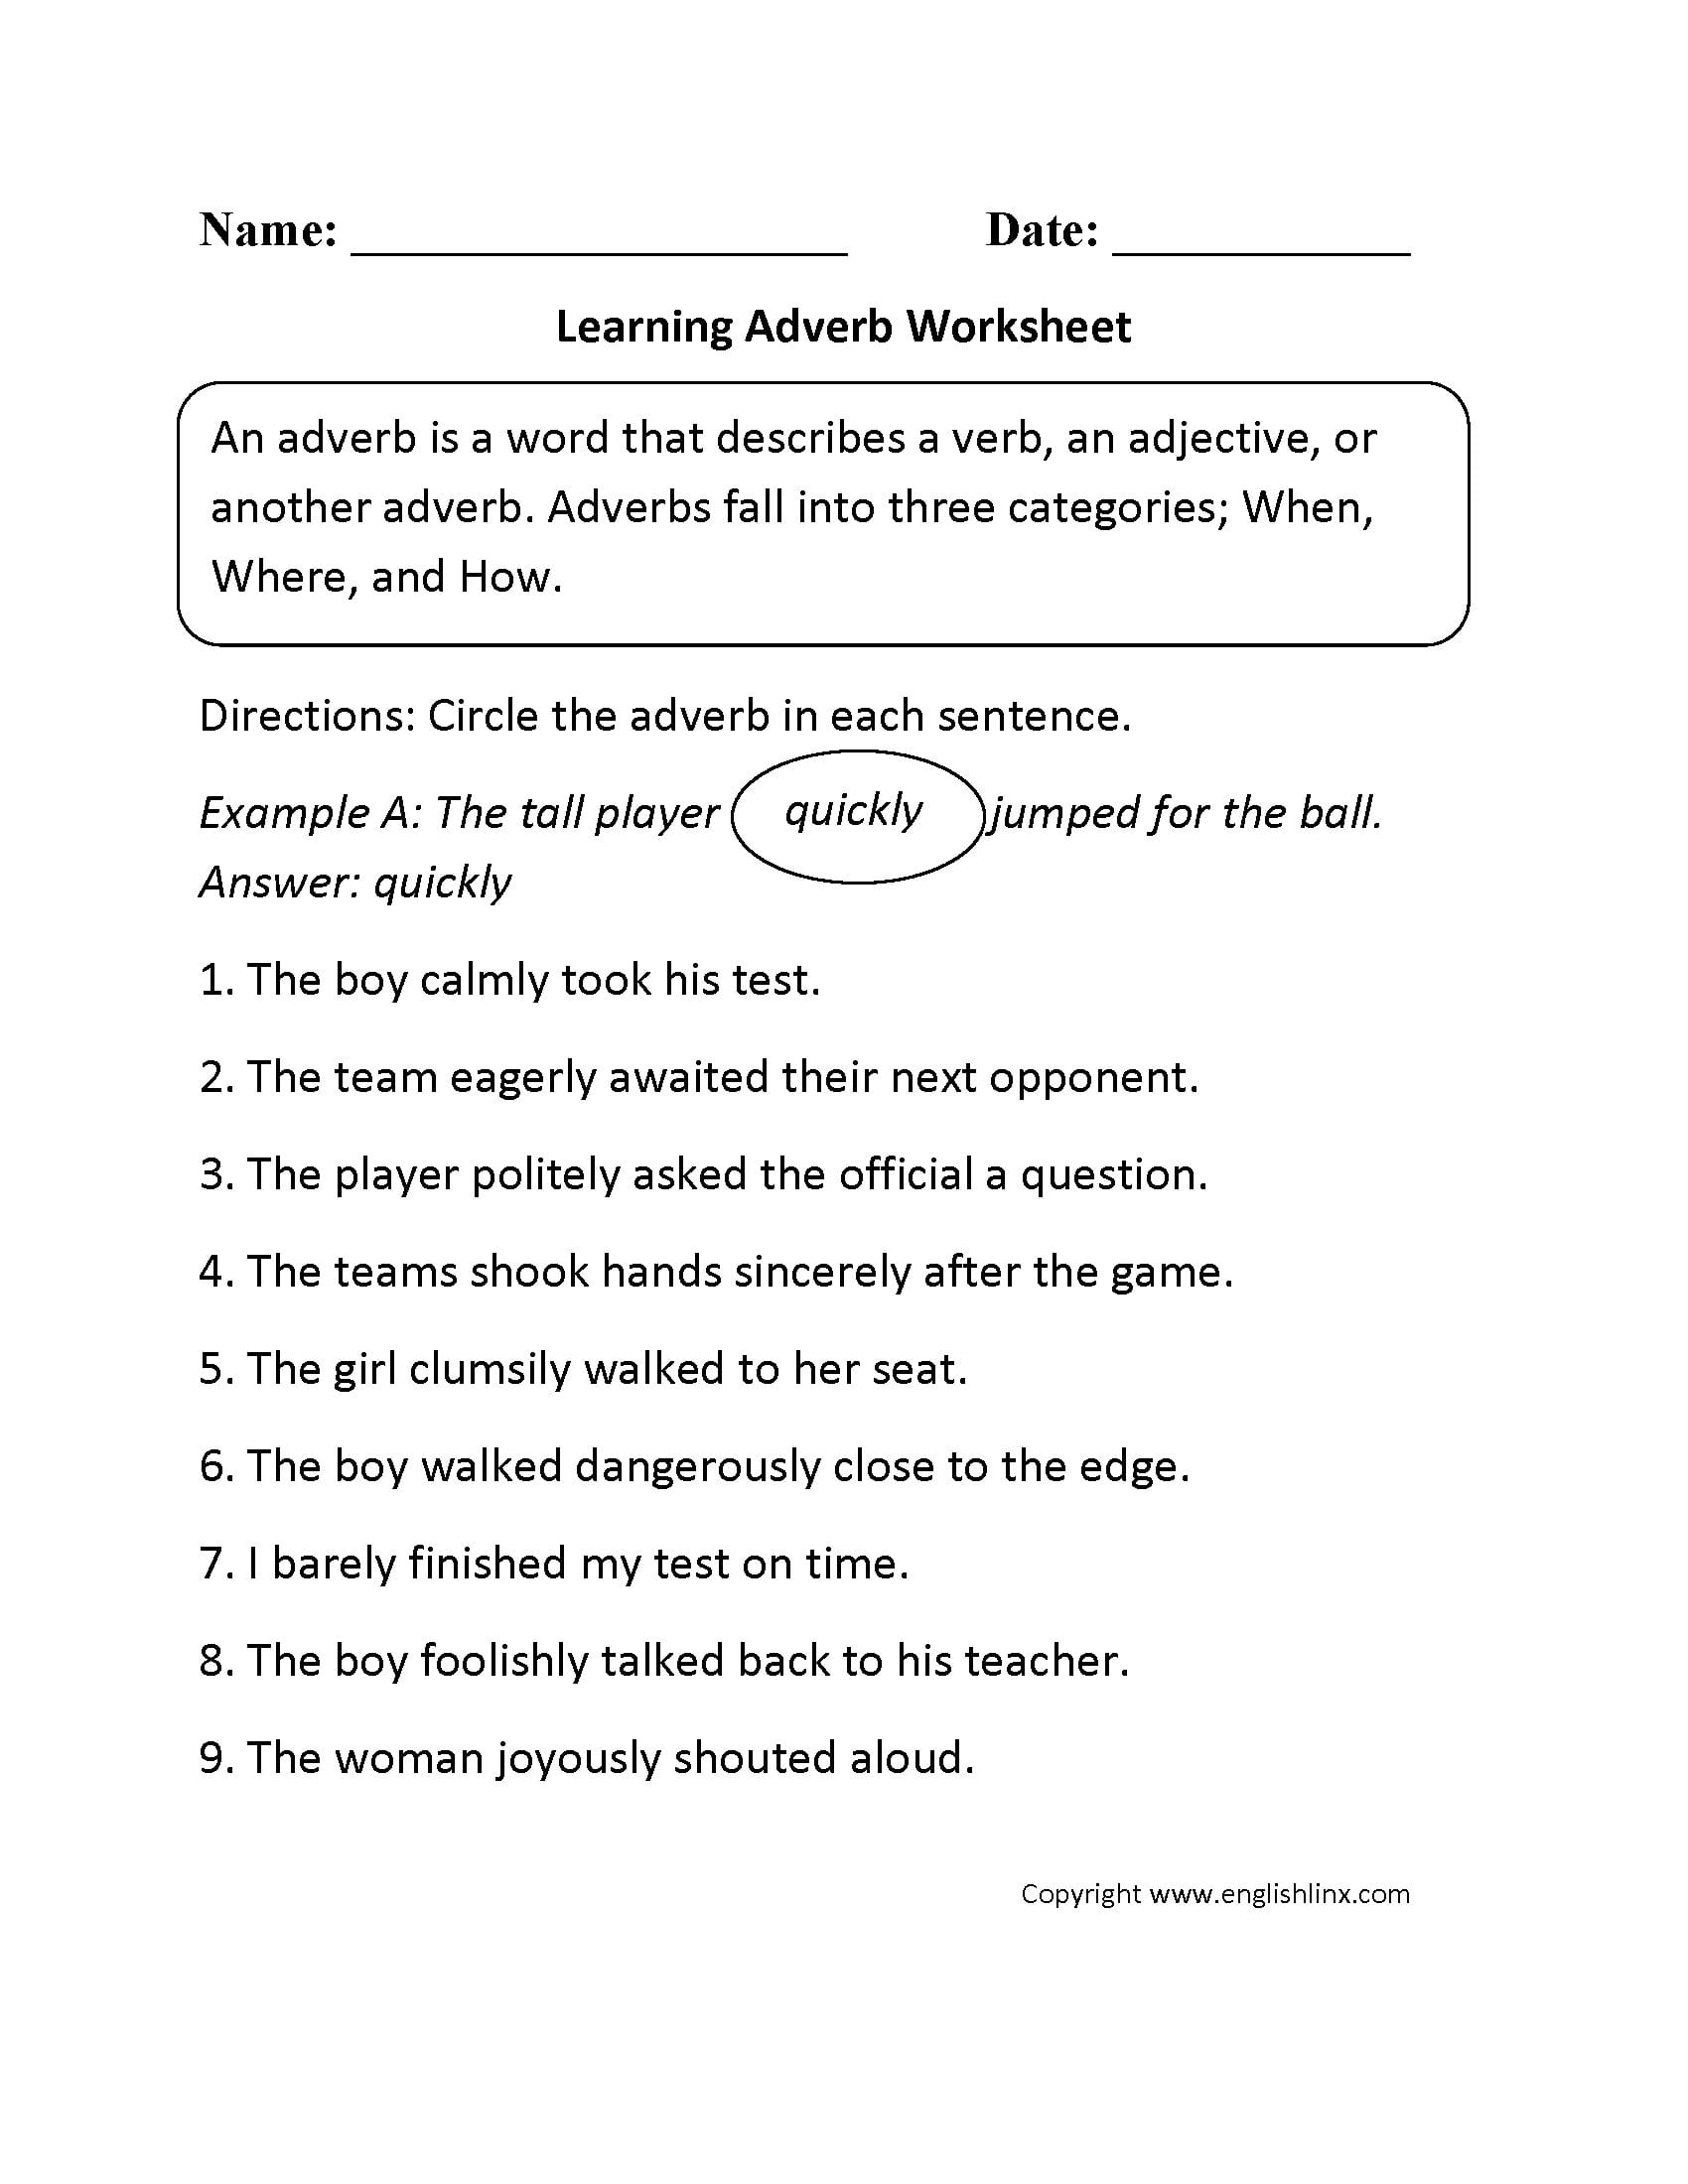 adverb-worksheets-3rd-grade-db-excel